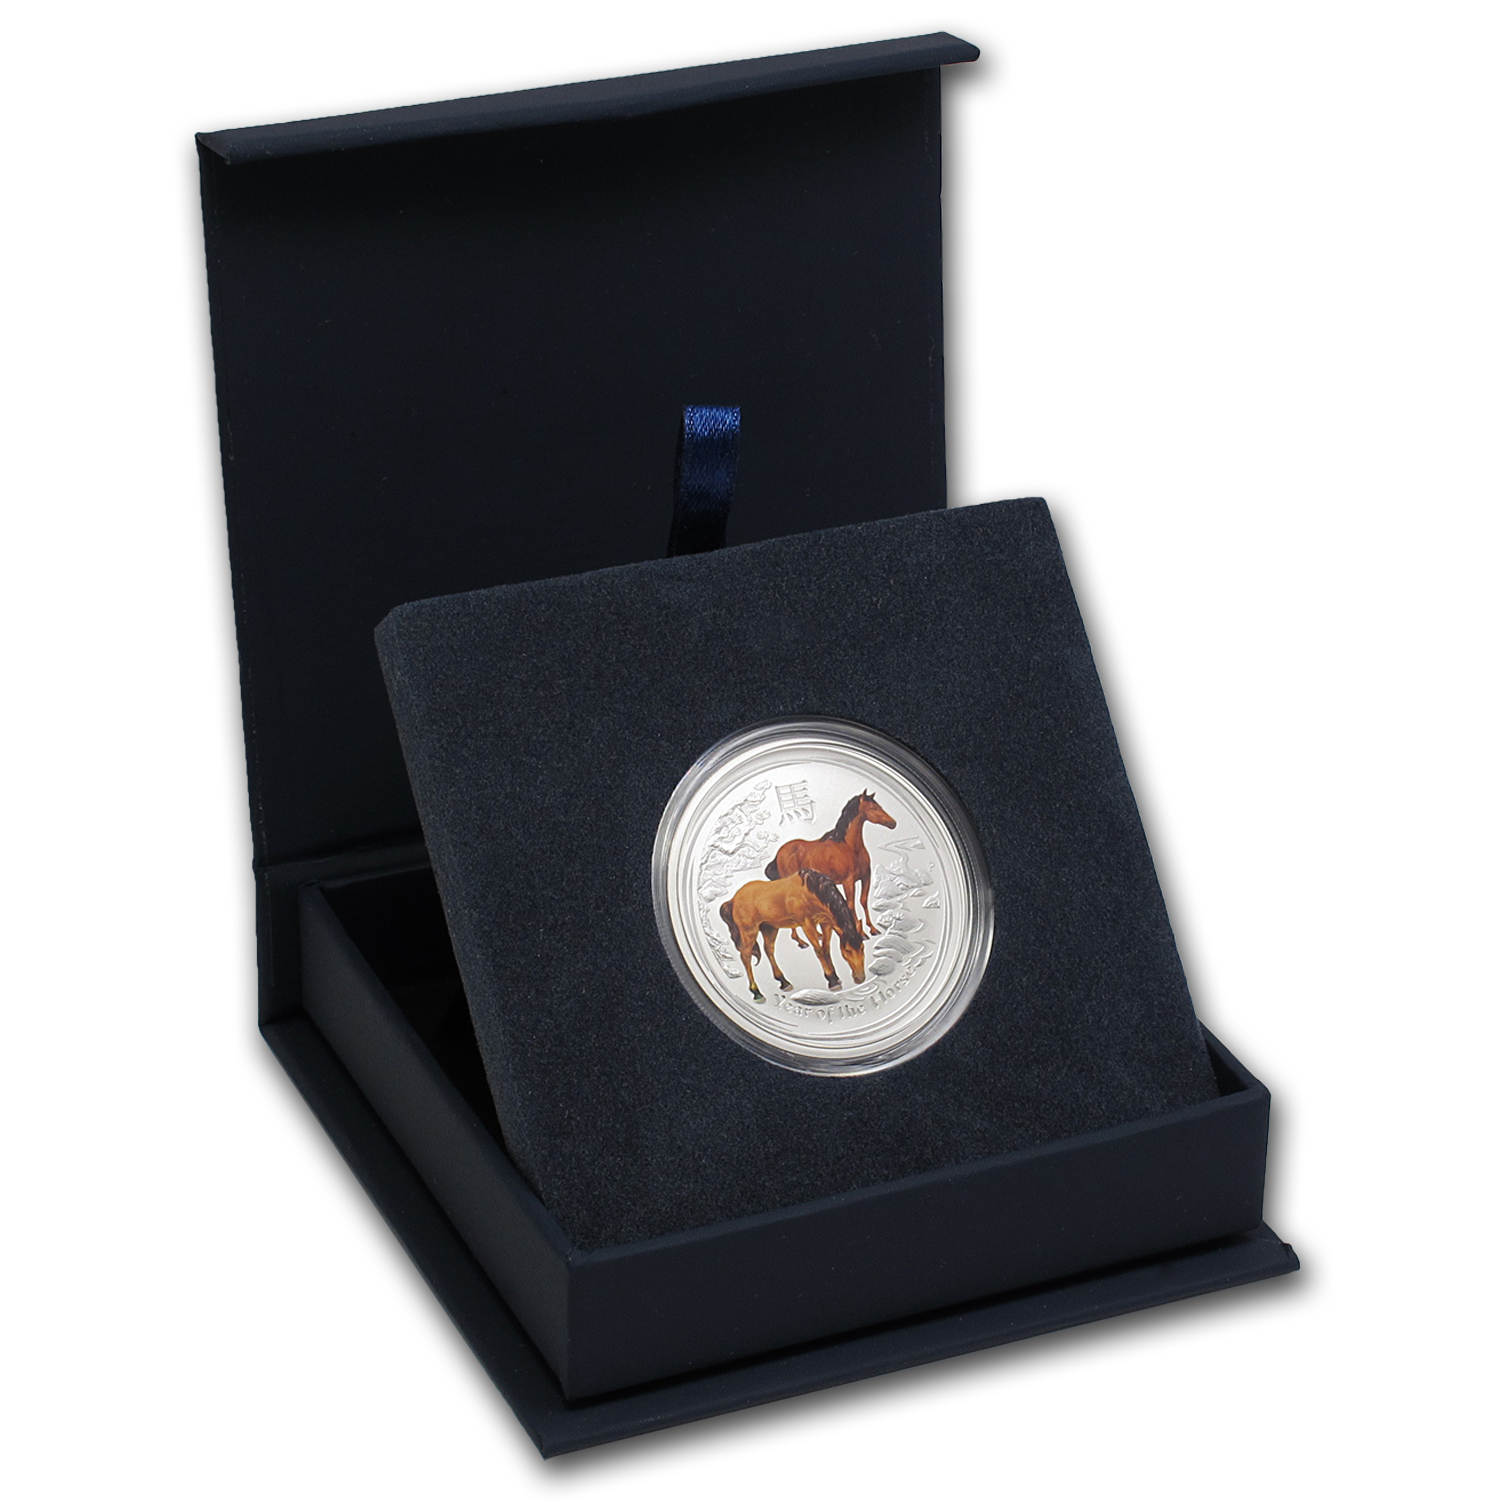 Buy APMEX Gift Box - 1/2 oz Perth Mint Silver Coin Series 2